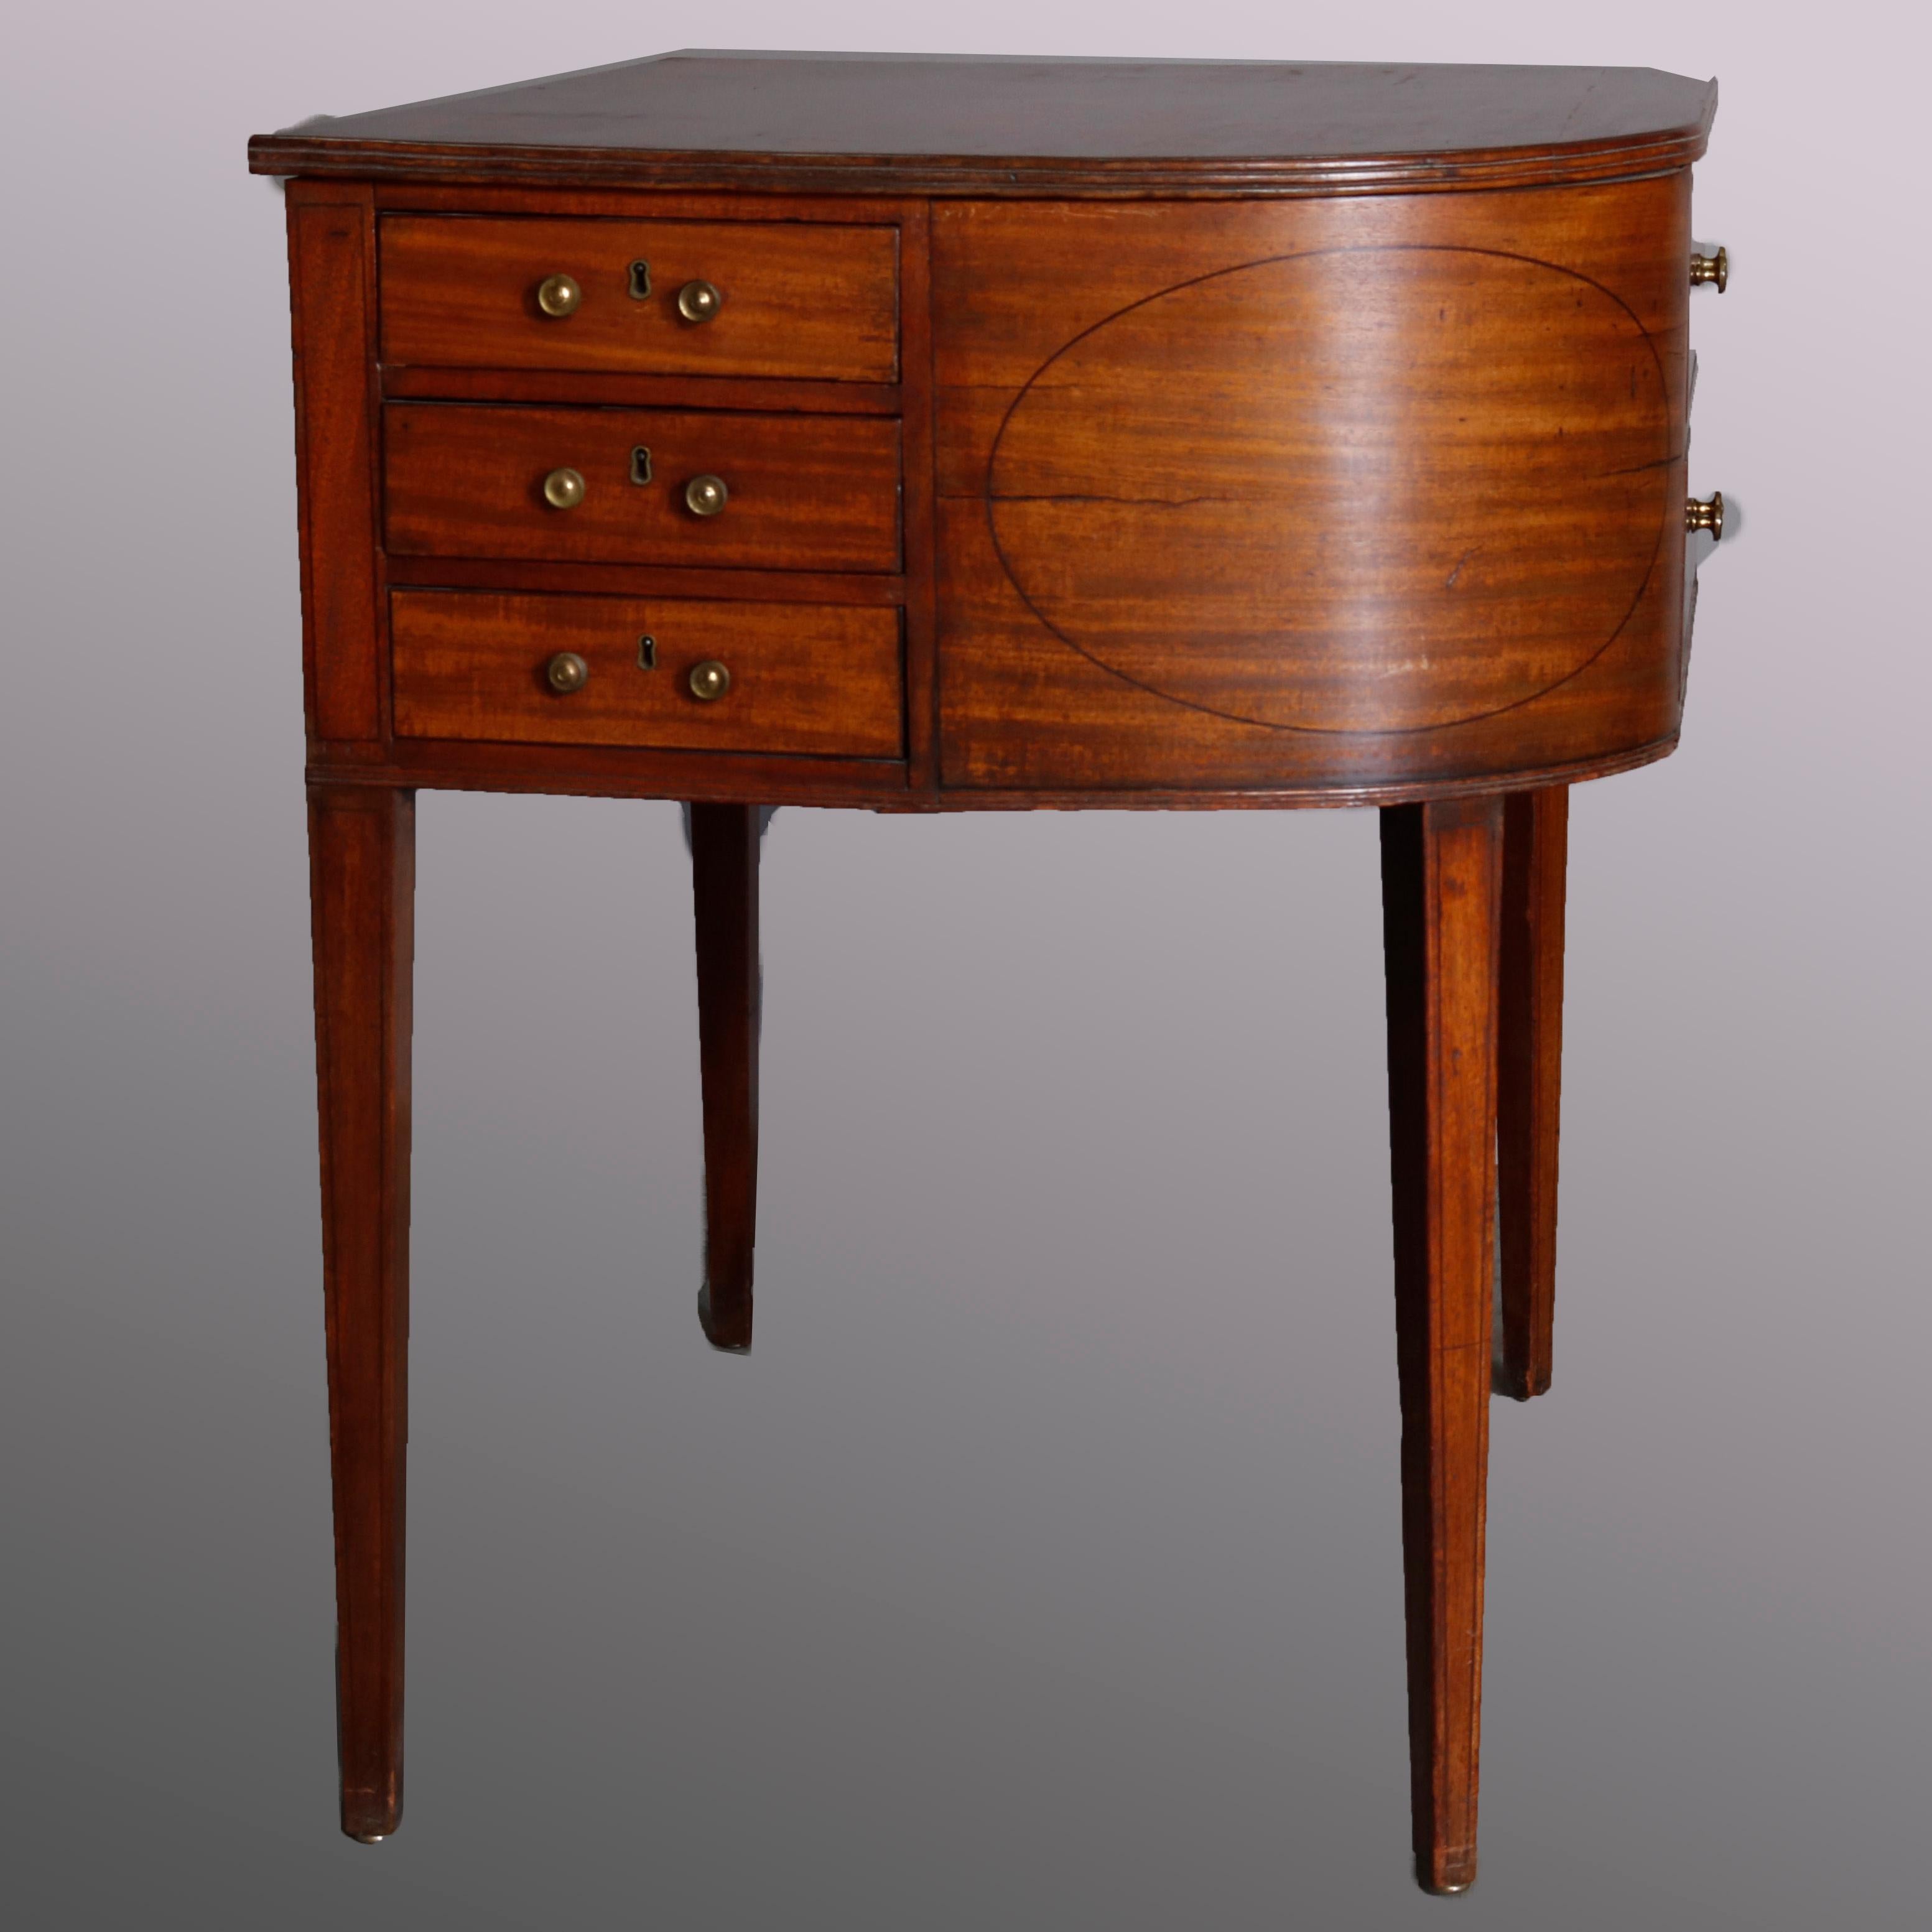 English Antique Hepplewhite Style Mahogany 8-Drawer Bent Wood Rent Table, circa 1850